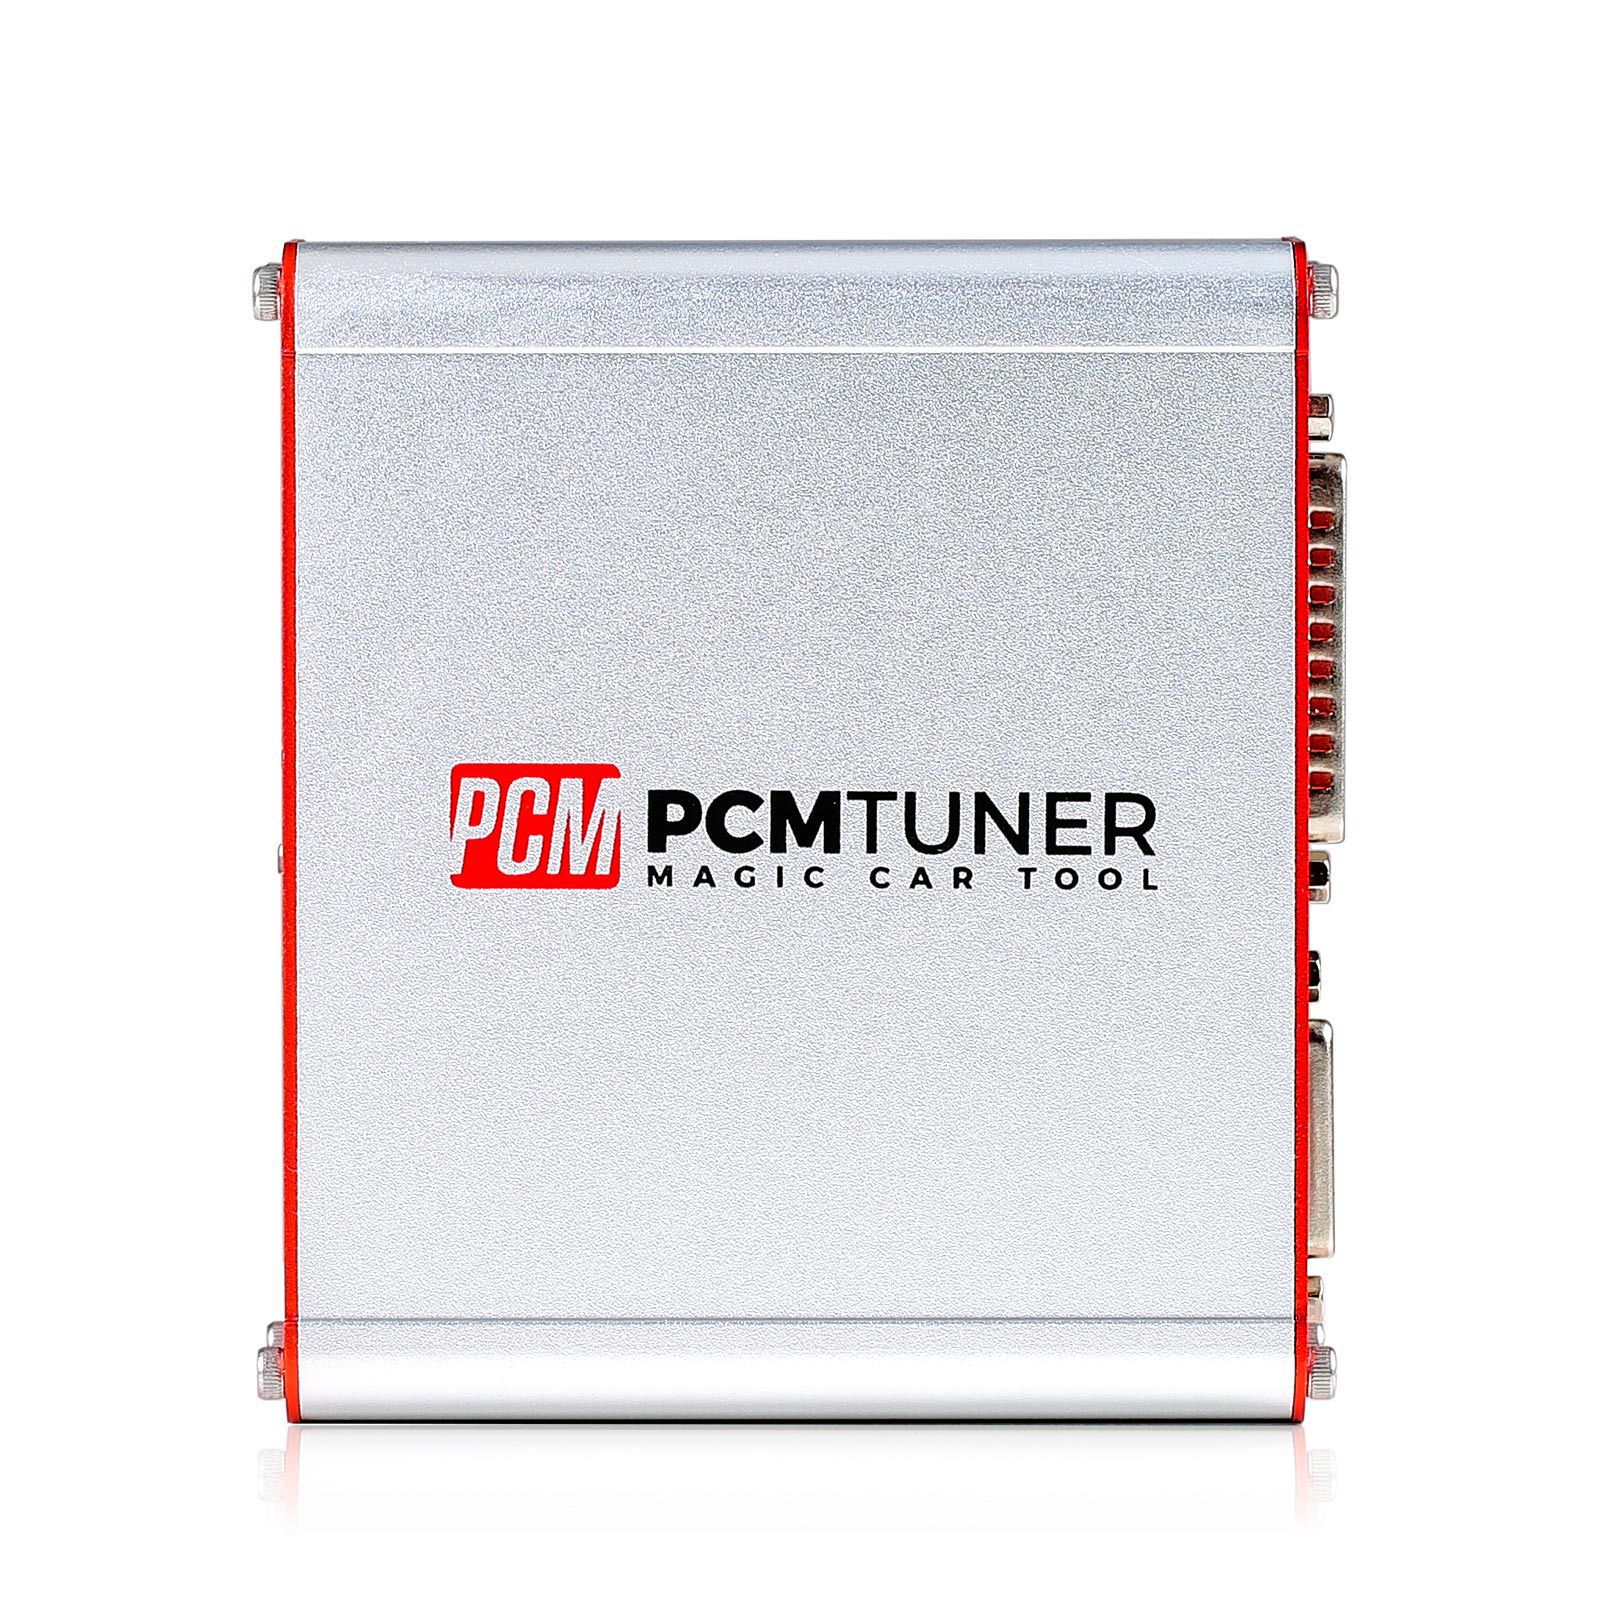 Programador ECU PCMtuner 67 módulos em 1 mais MPM OTG ECU TCU Chip Tuning Programming Tool